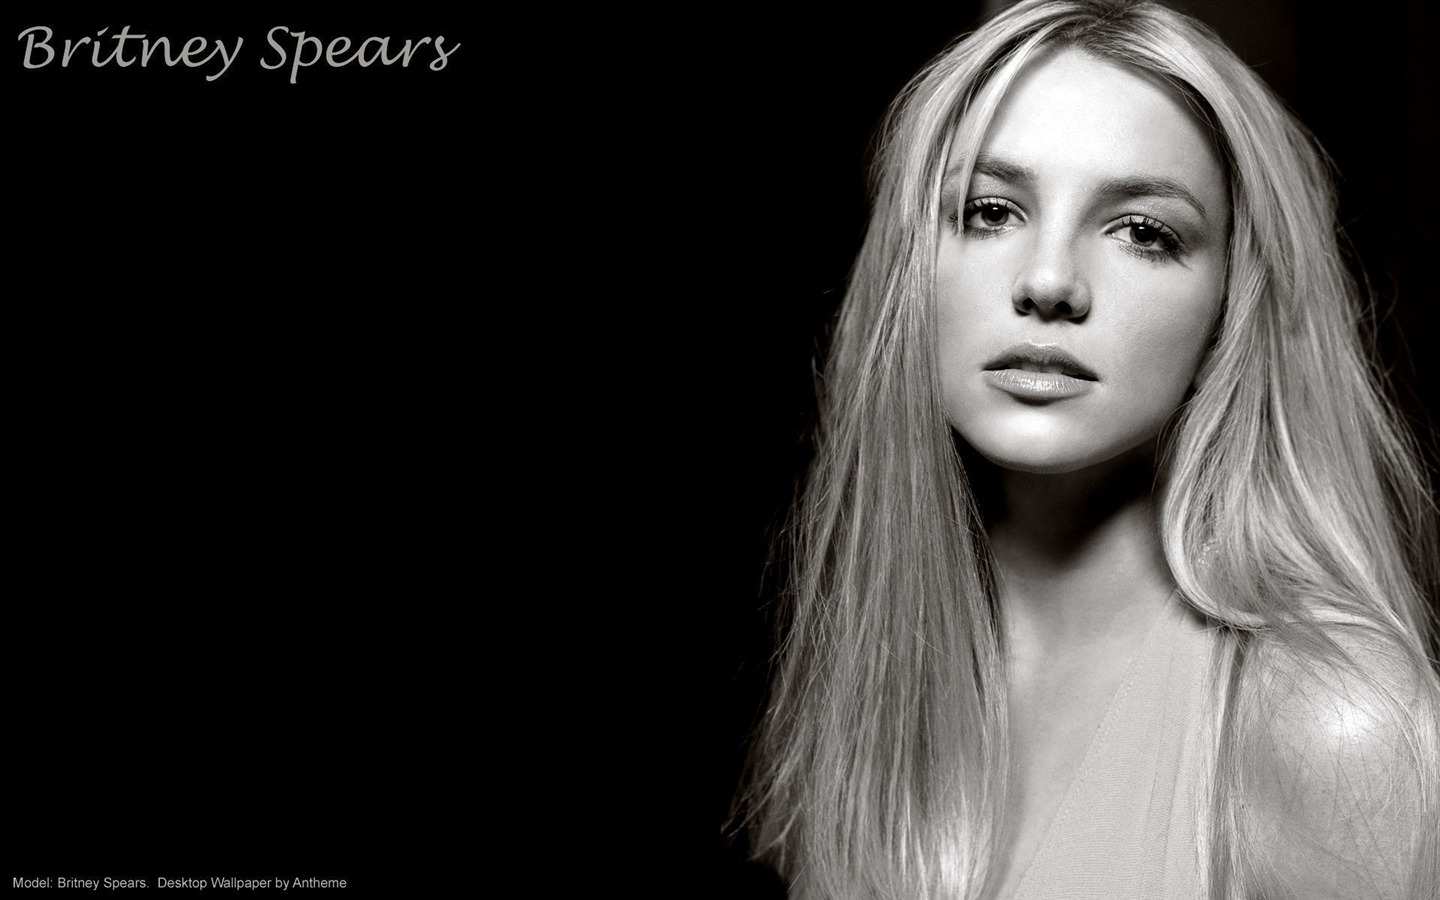 Fond d'écran Britney Spears belle #5 - 1440x900